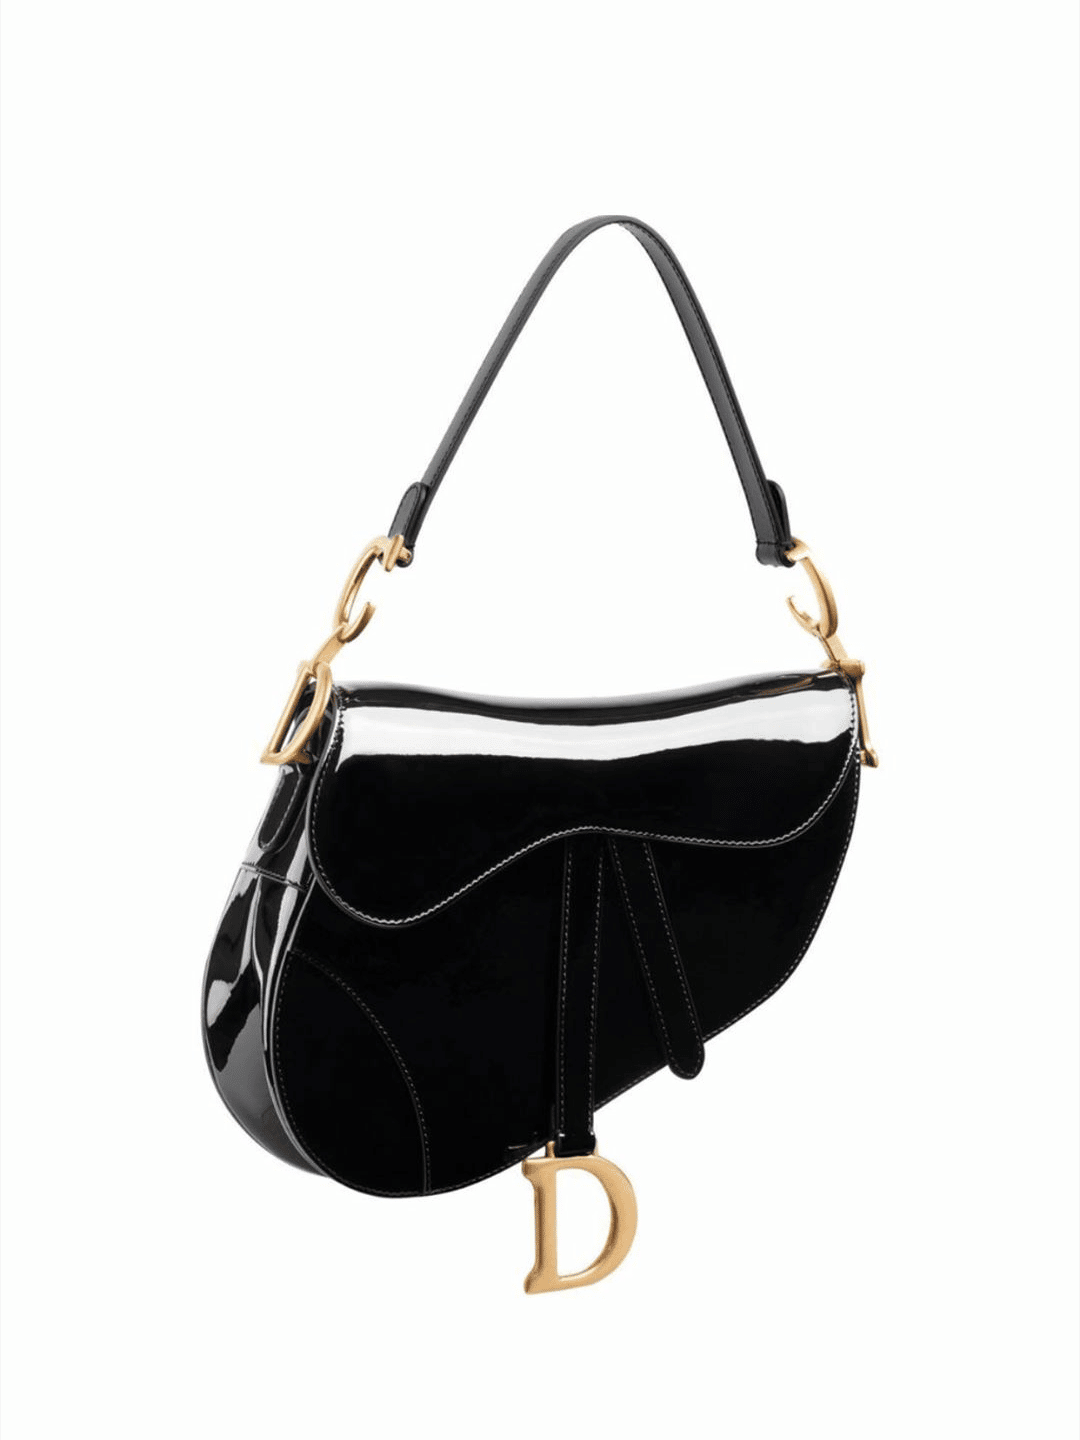 Dior Black Patent Saddle Bag